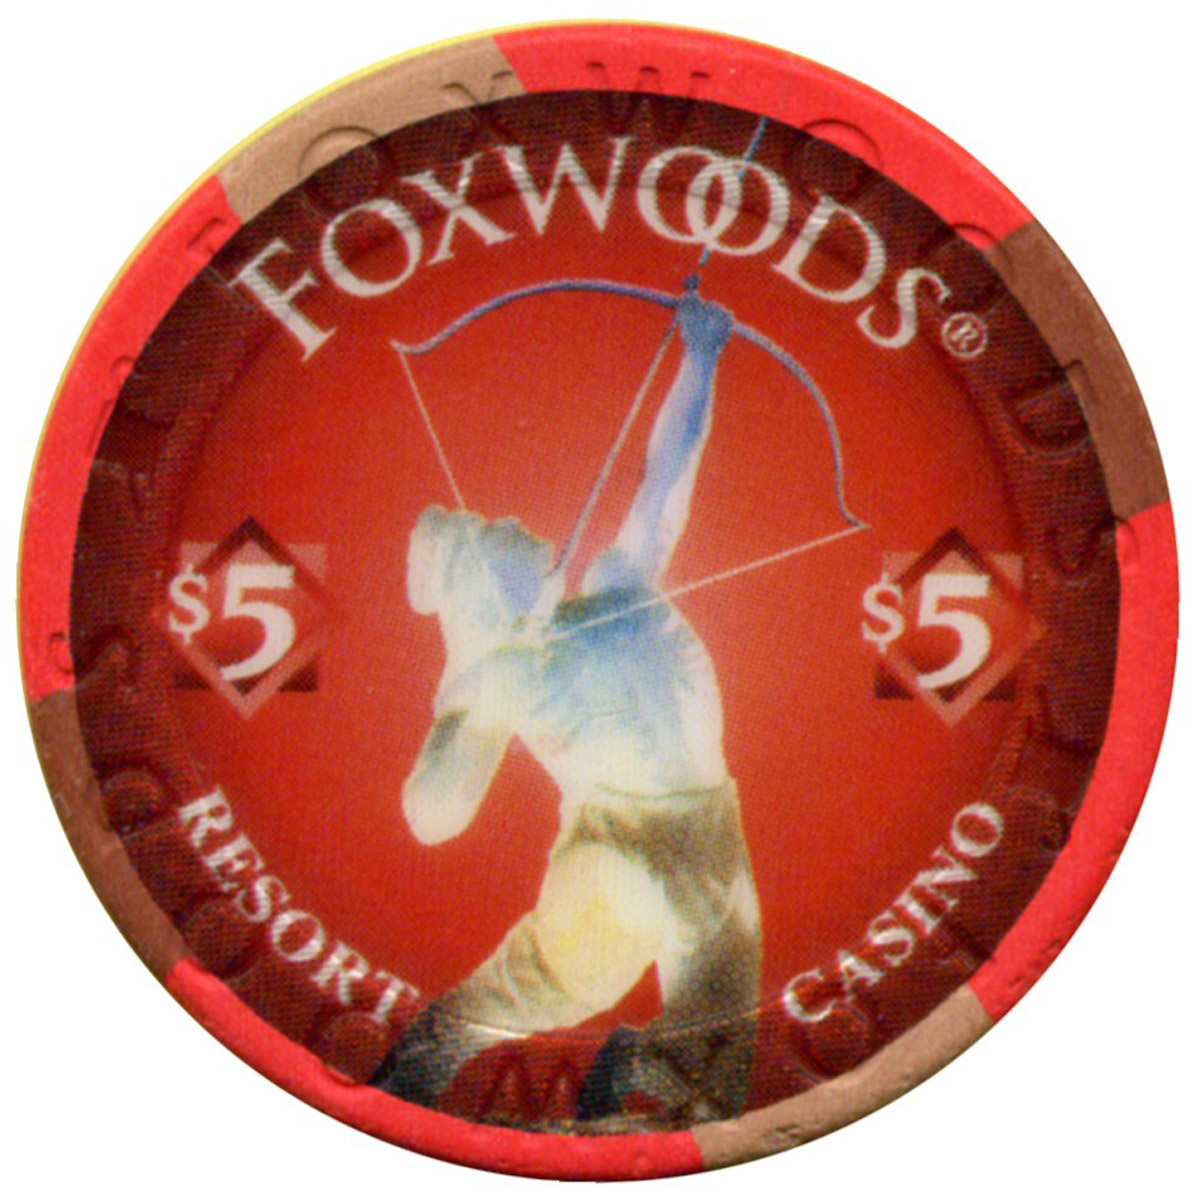 Foxwoods Casino E Ledyard CT 06339 USA